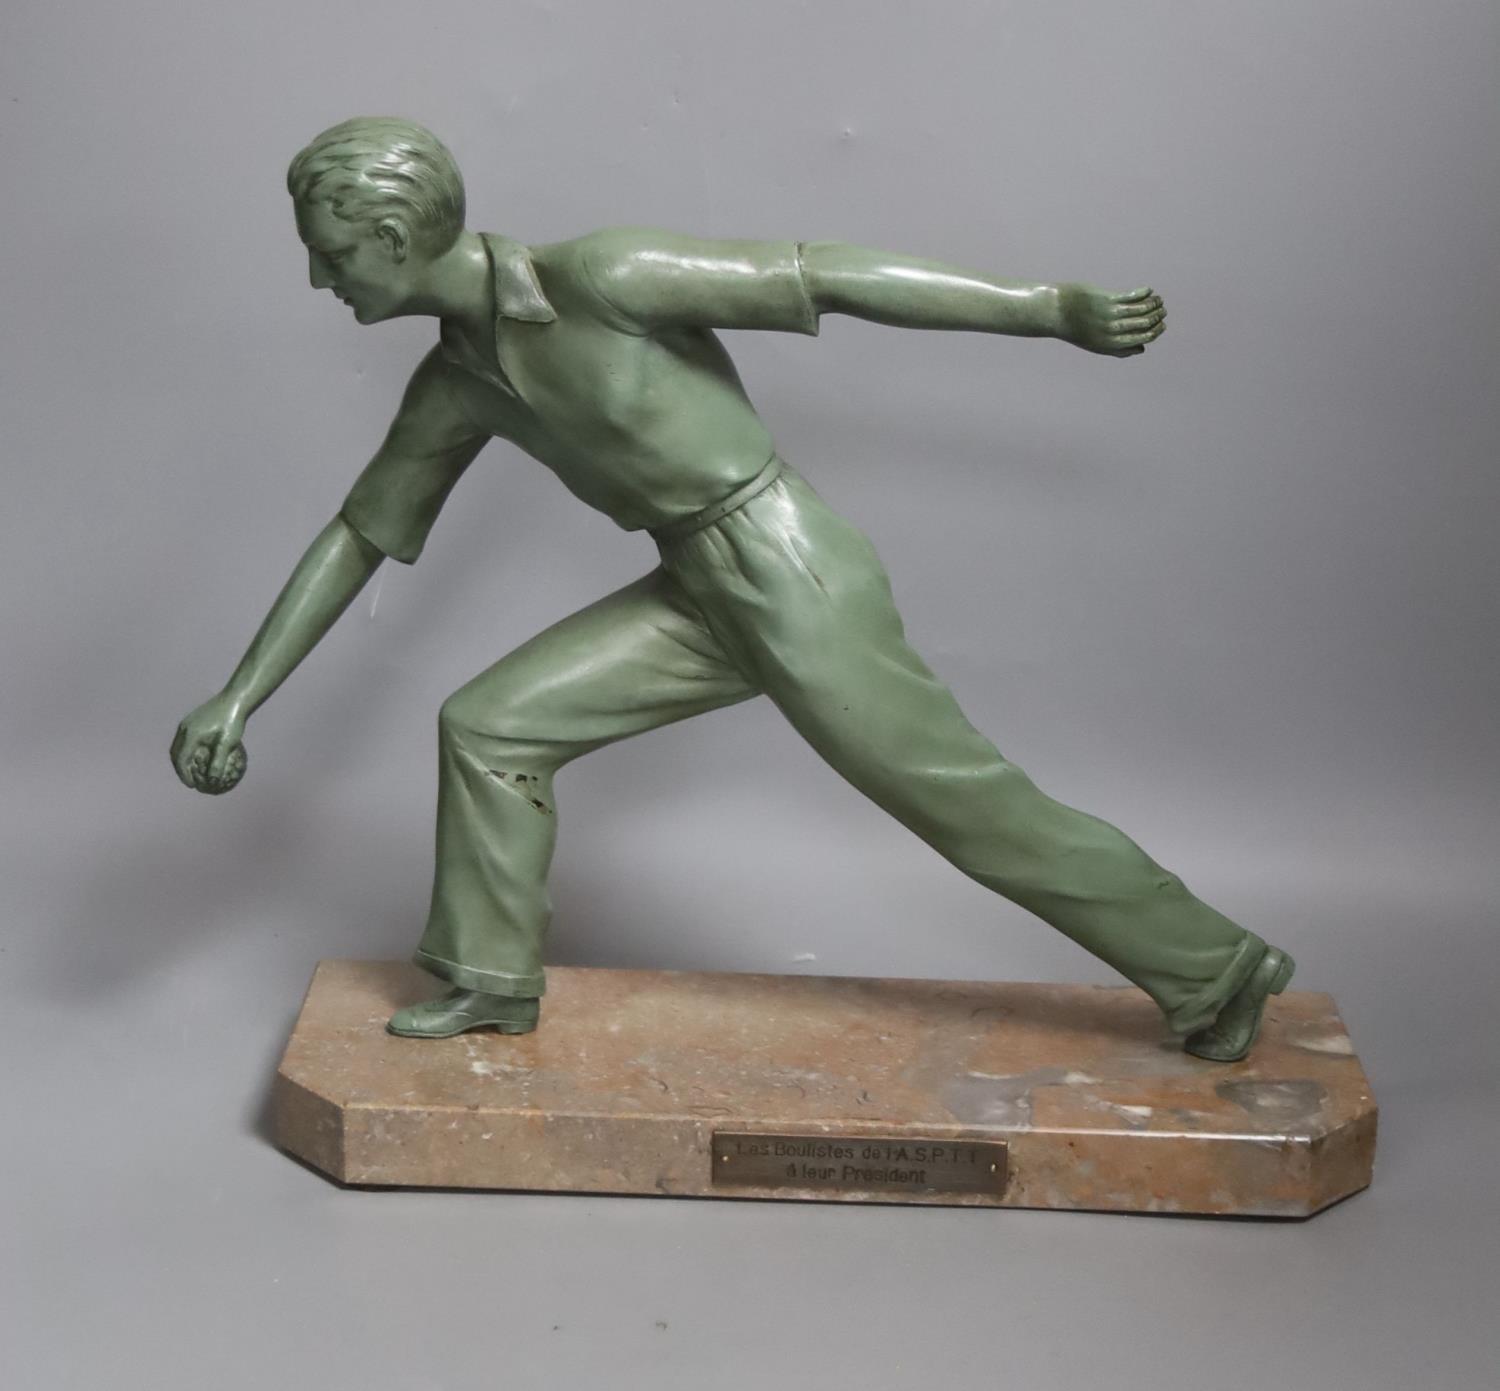 An Art Deco model of a gentleman playing boules. Marble base with plaque reading ‘Les boulistes de